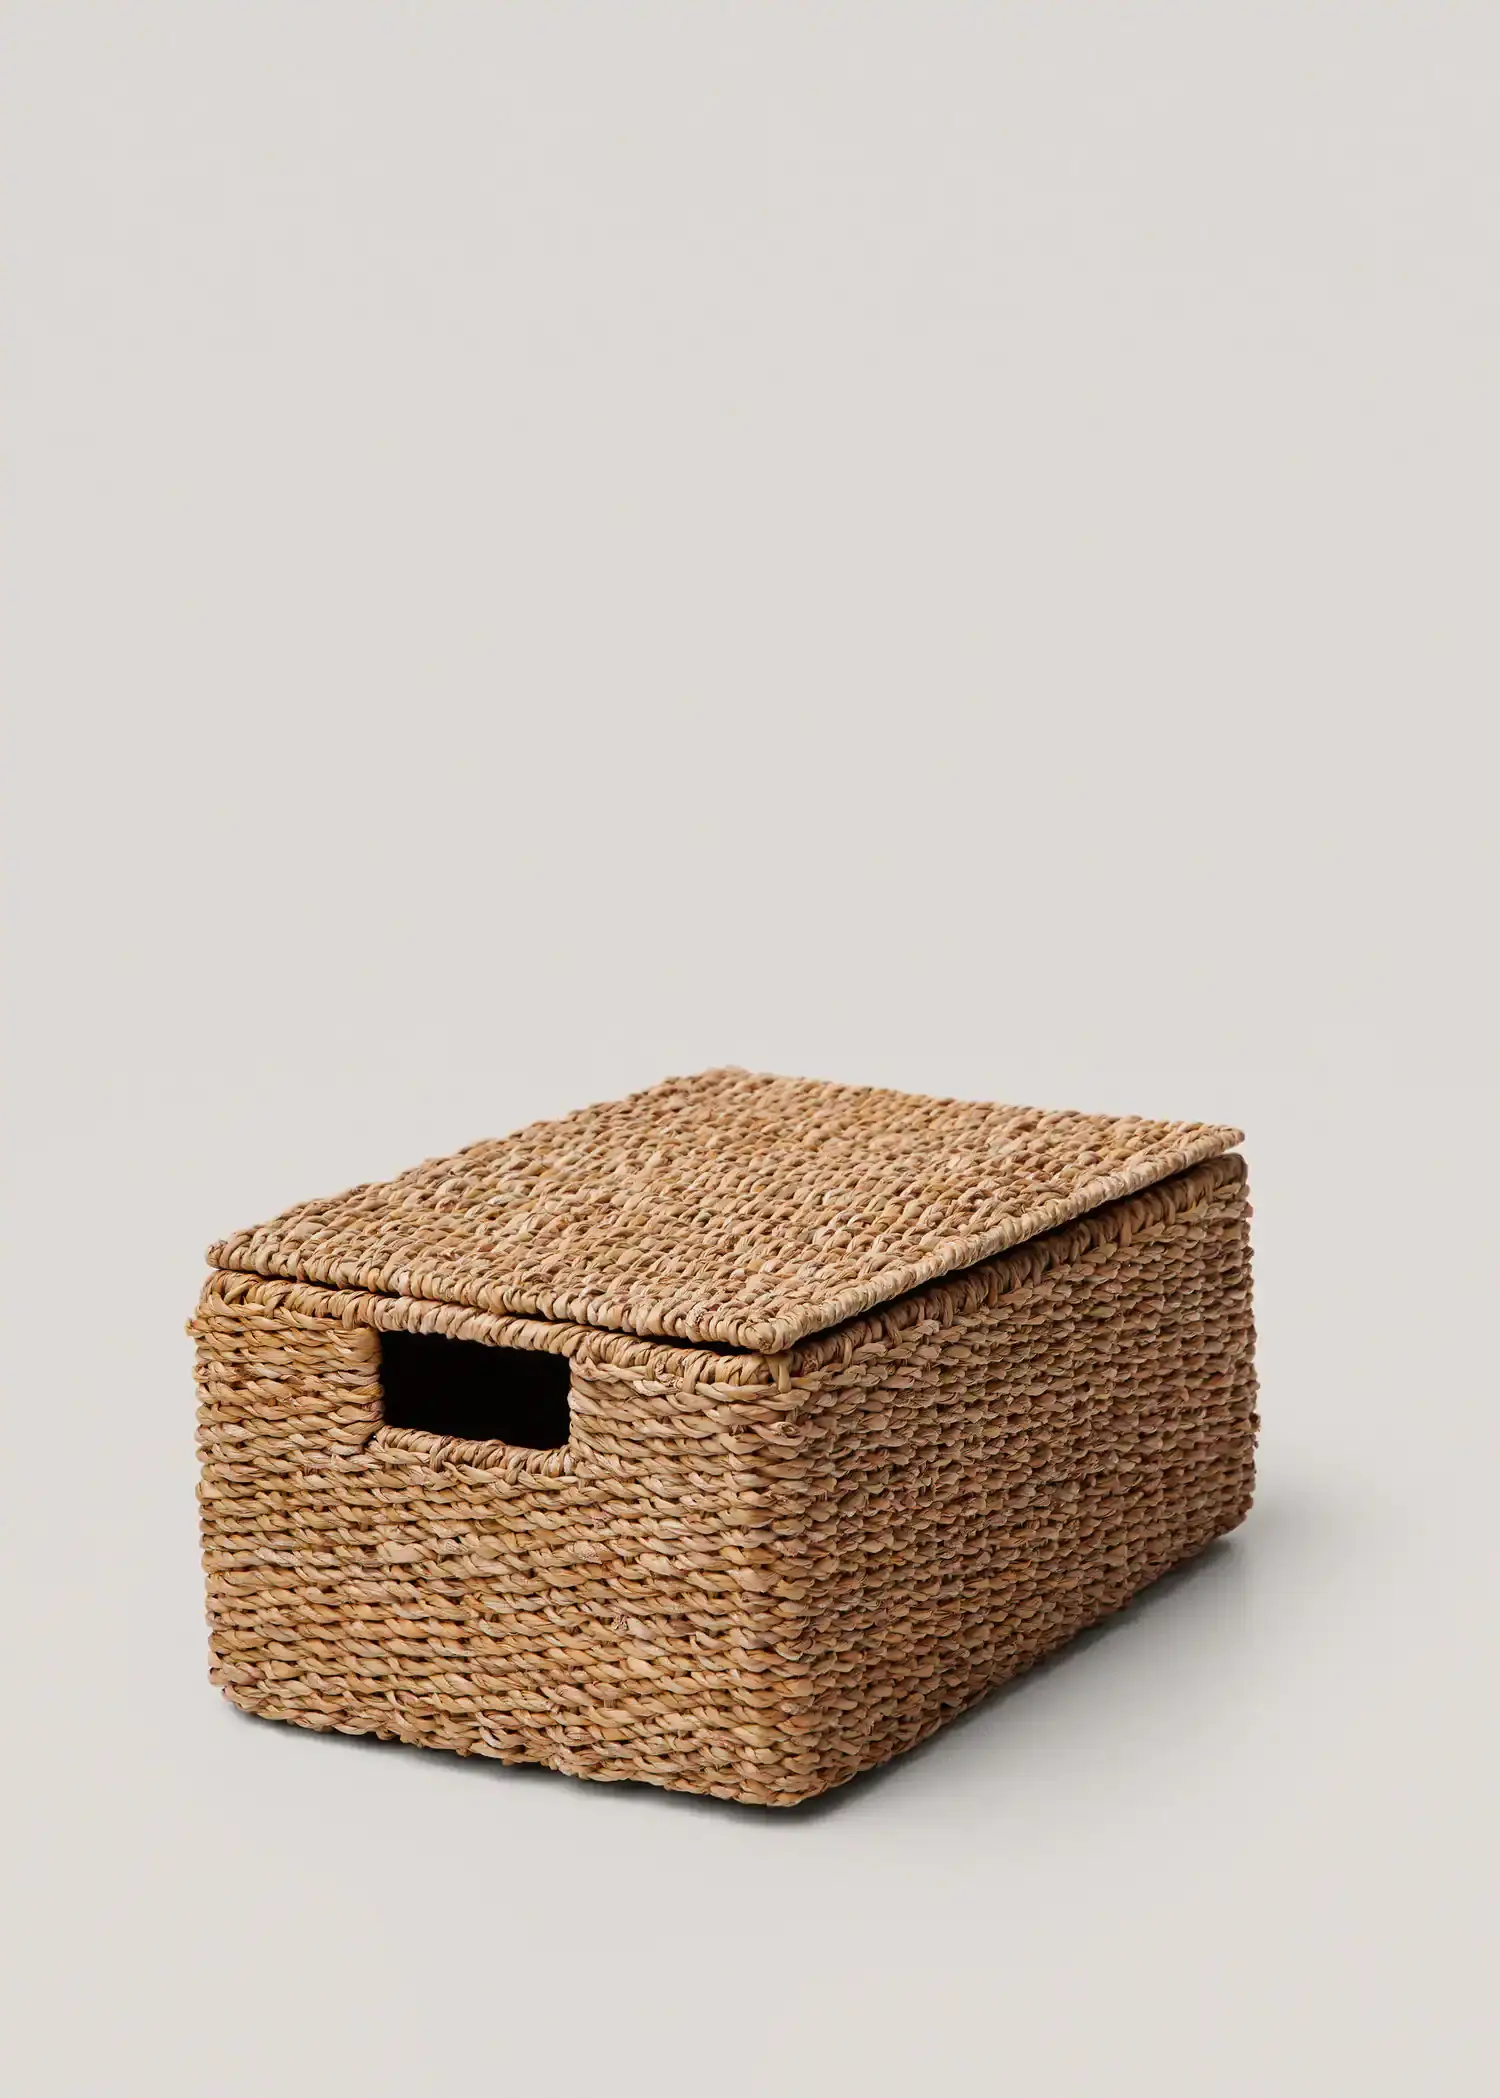 Mango Braided basket with handles 35x25cm. 3